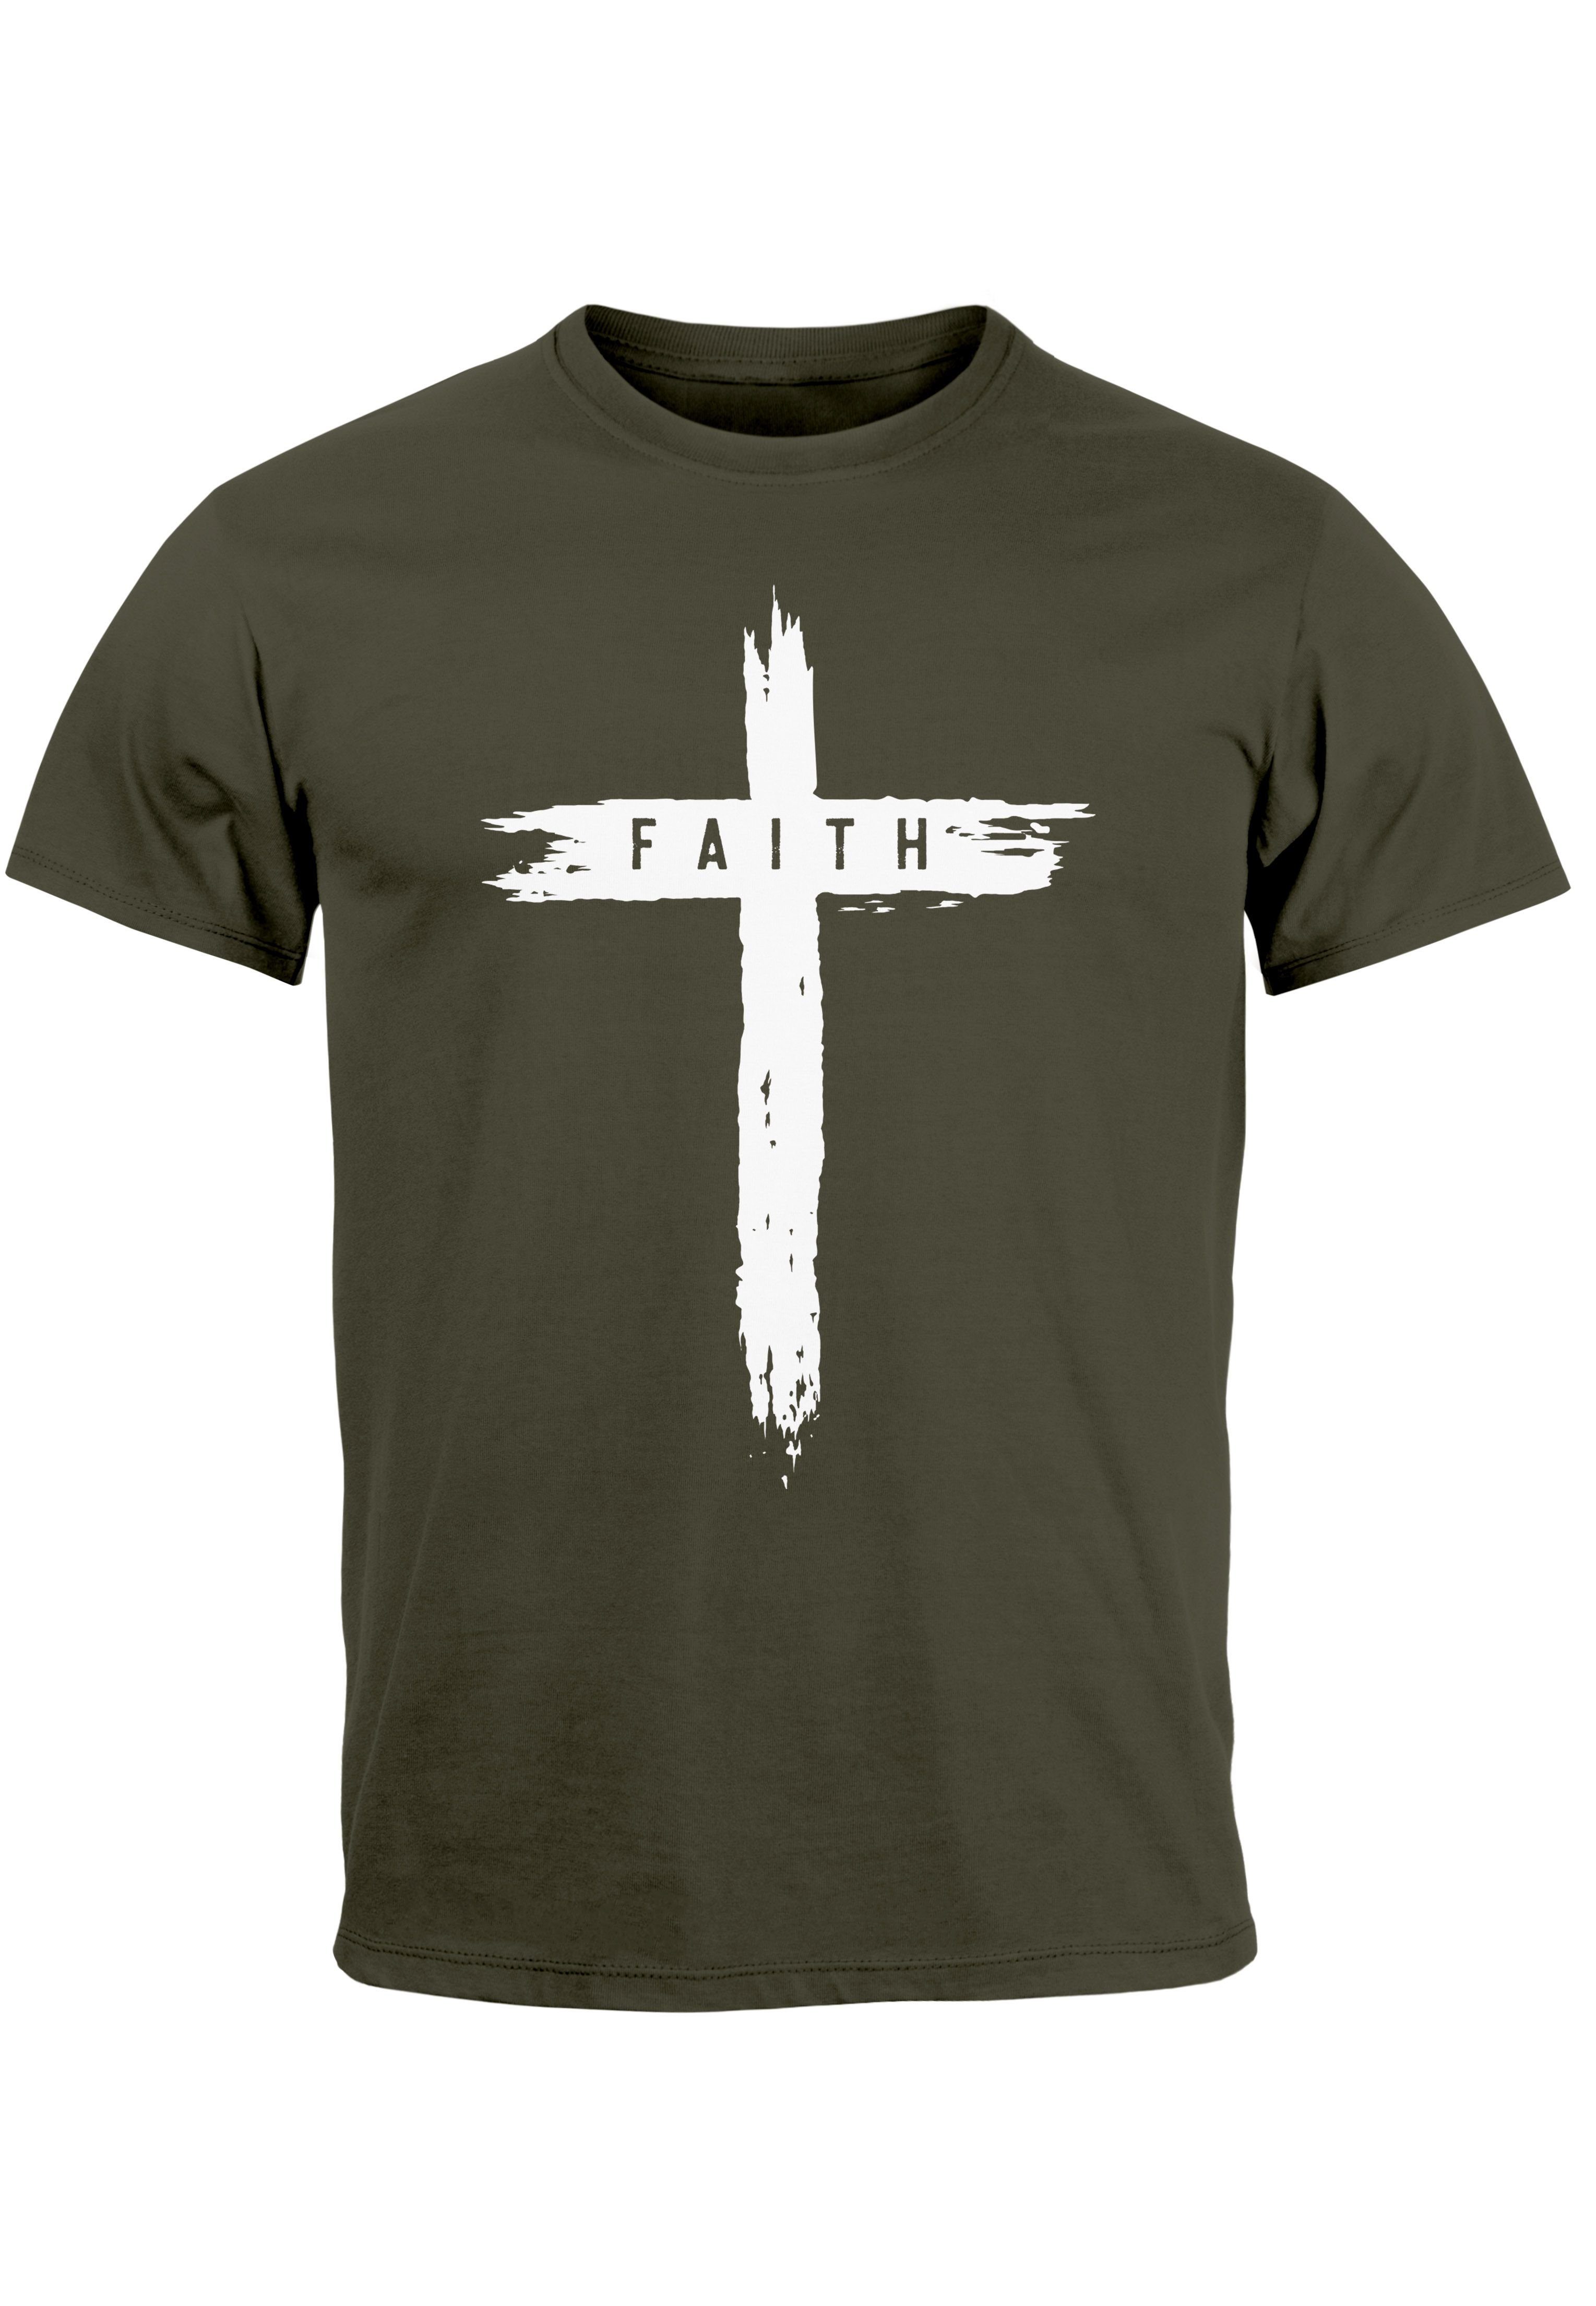 Neverless Print-Shirt Herren T-Shirt Printshirt Aufdruck Kreuz Cross Faith Glaube Trend-Moti mit Print army